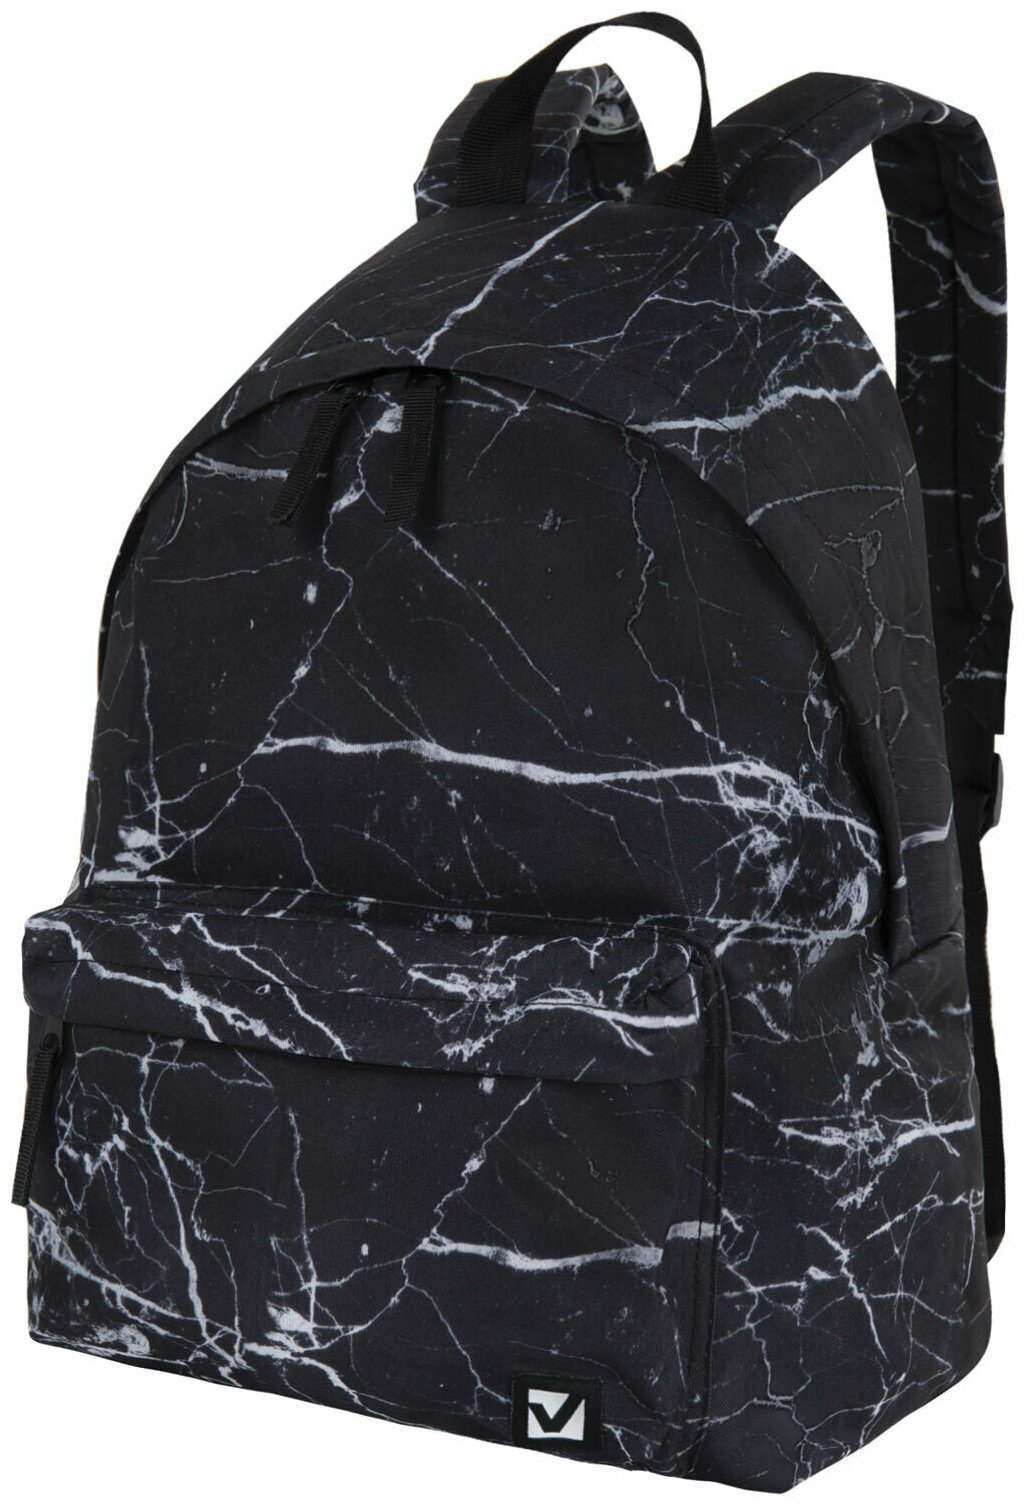 Рюкзак универсальный Brauberg сити-формат "Black marble" 20 литров, 41х32х14 см (270790)